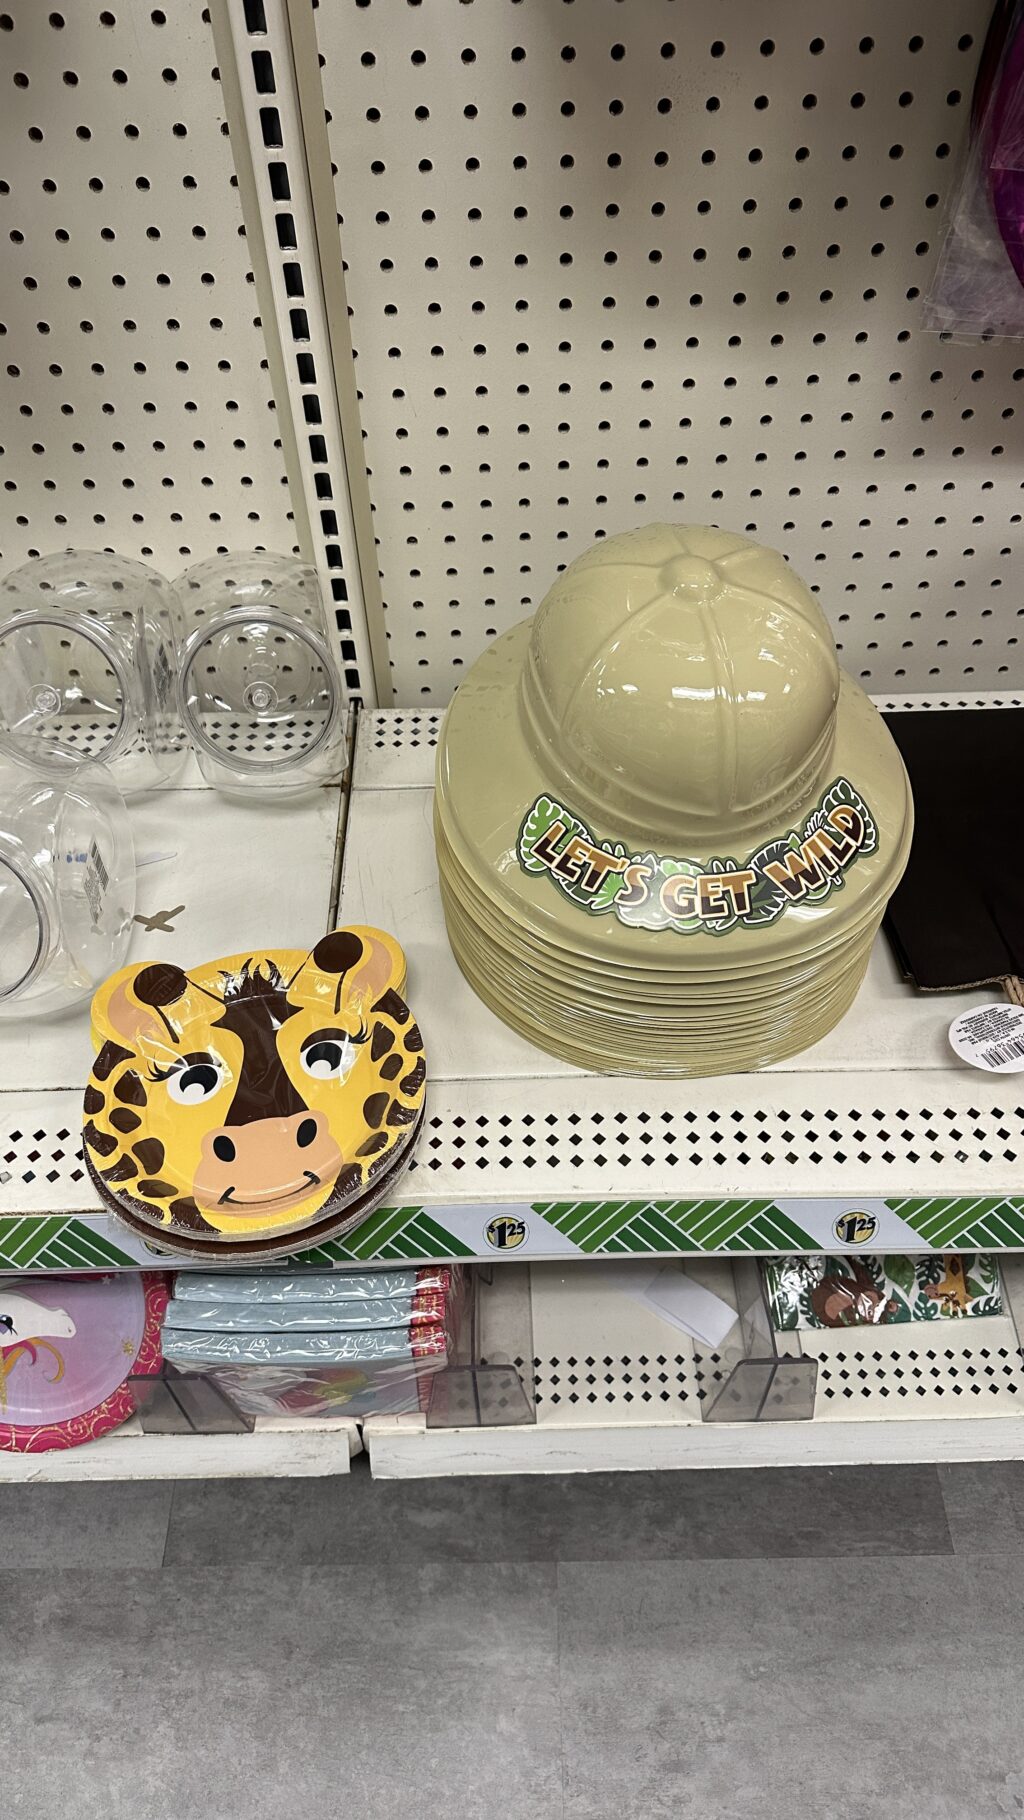 safari party supplies on shelf at dollar tree